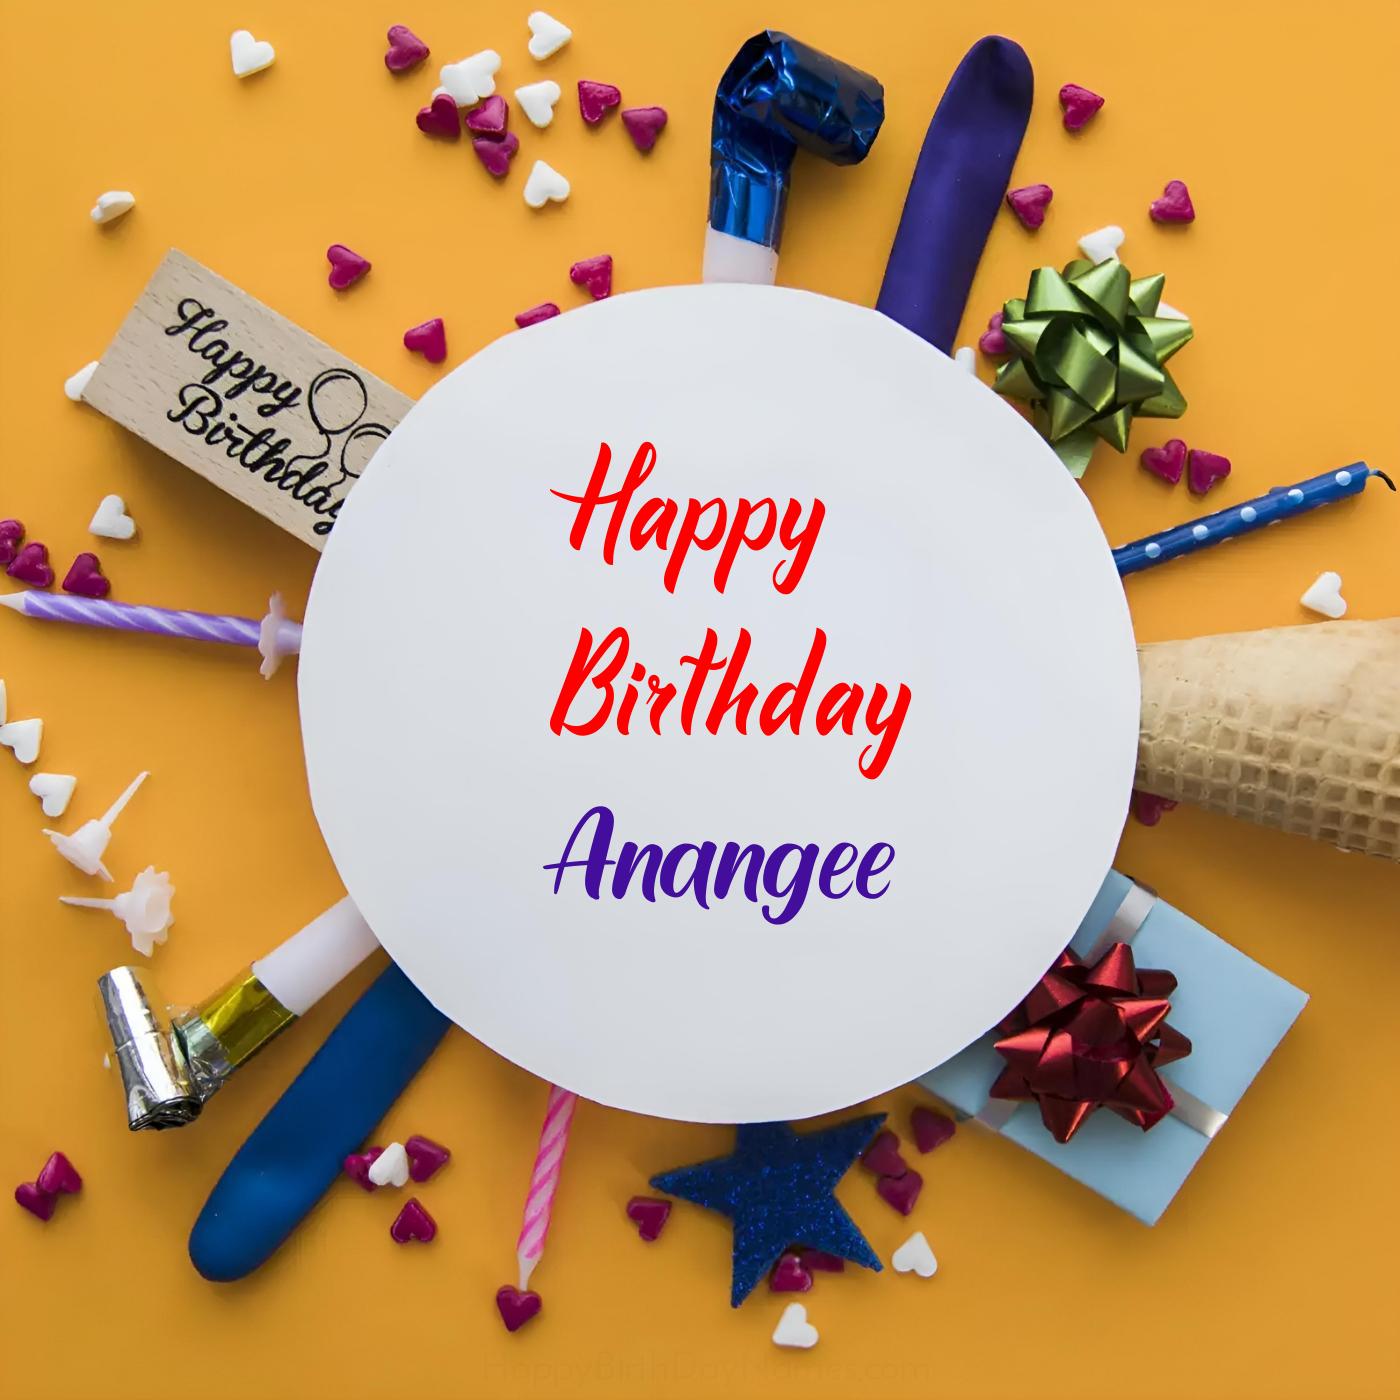 Happy Birthday Anangee Round Frame Card